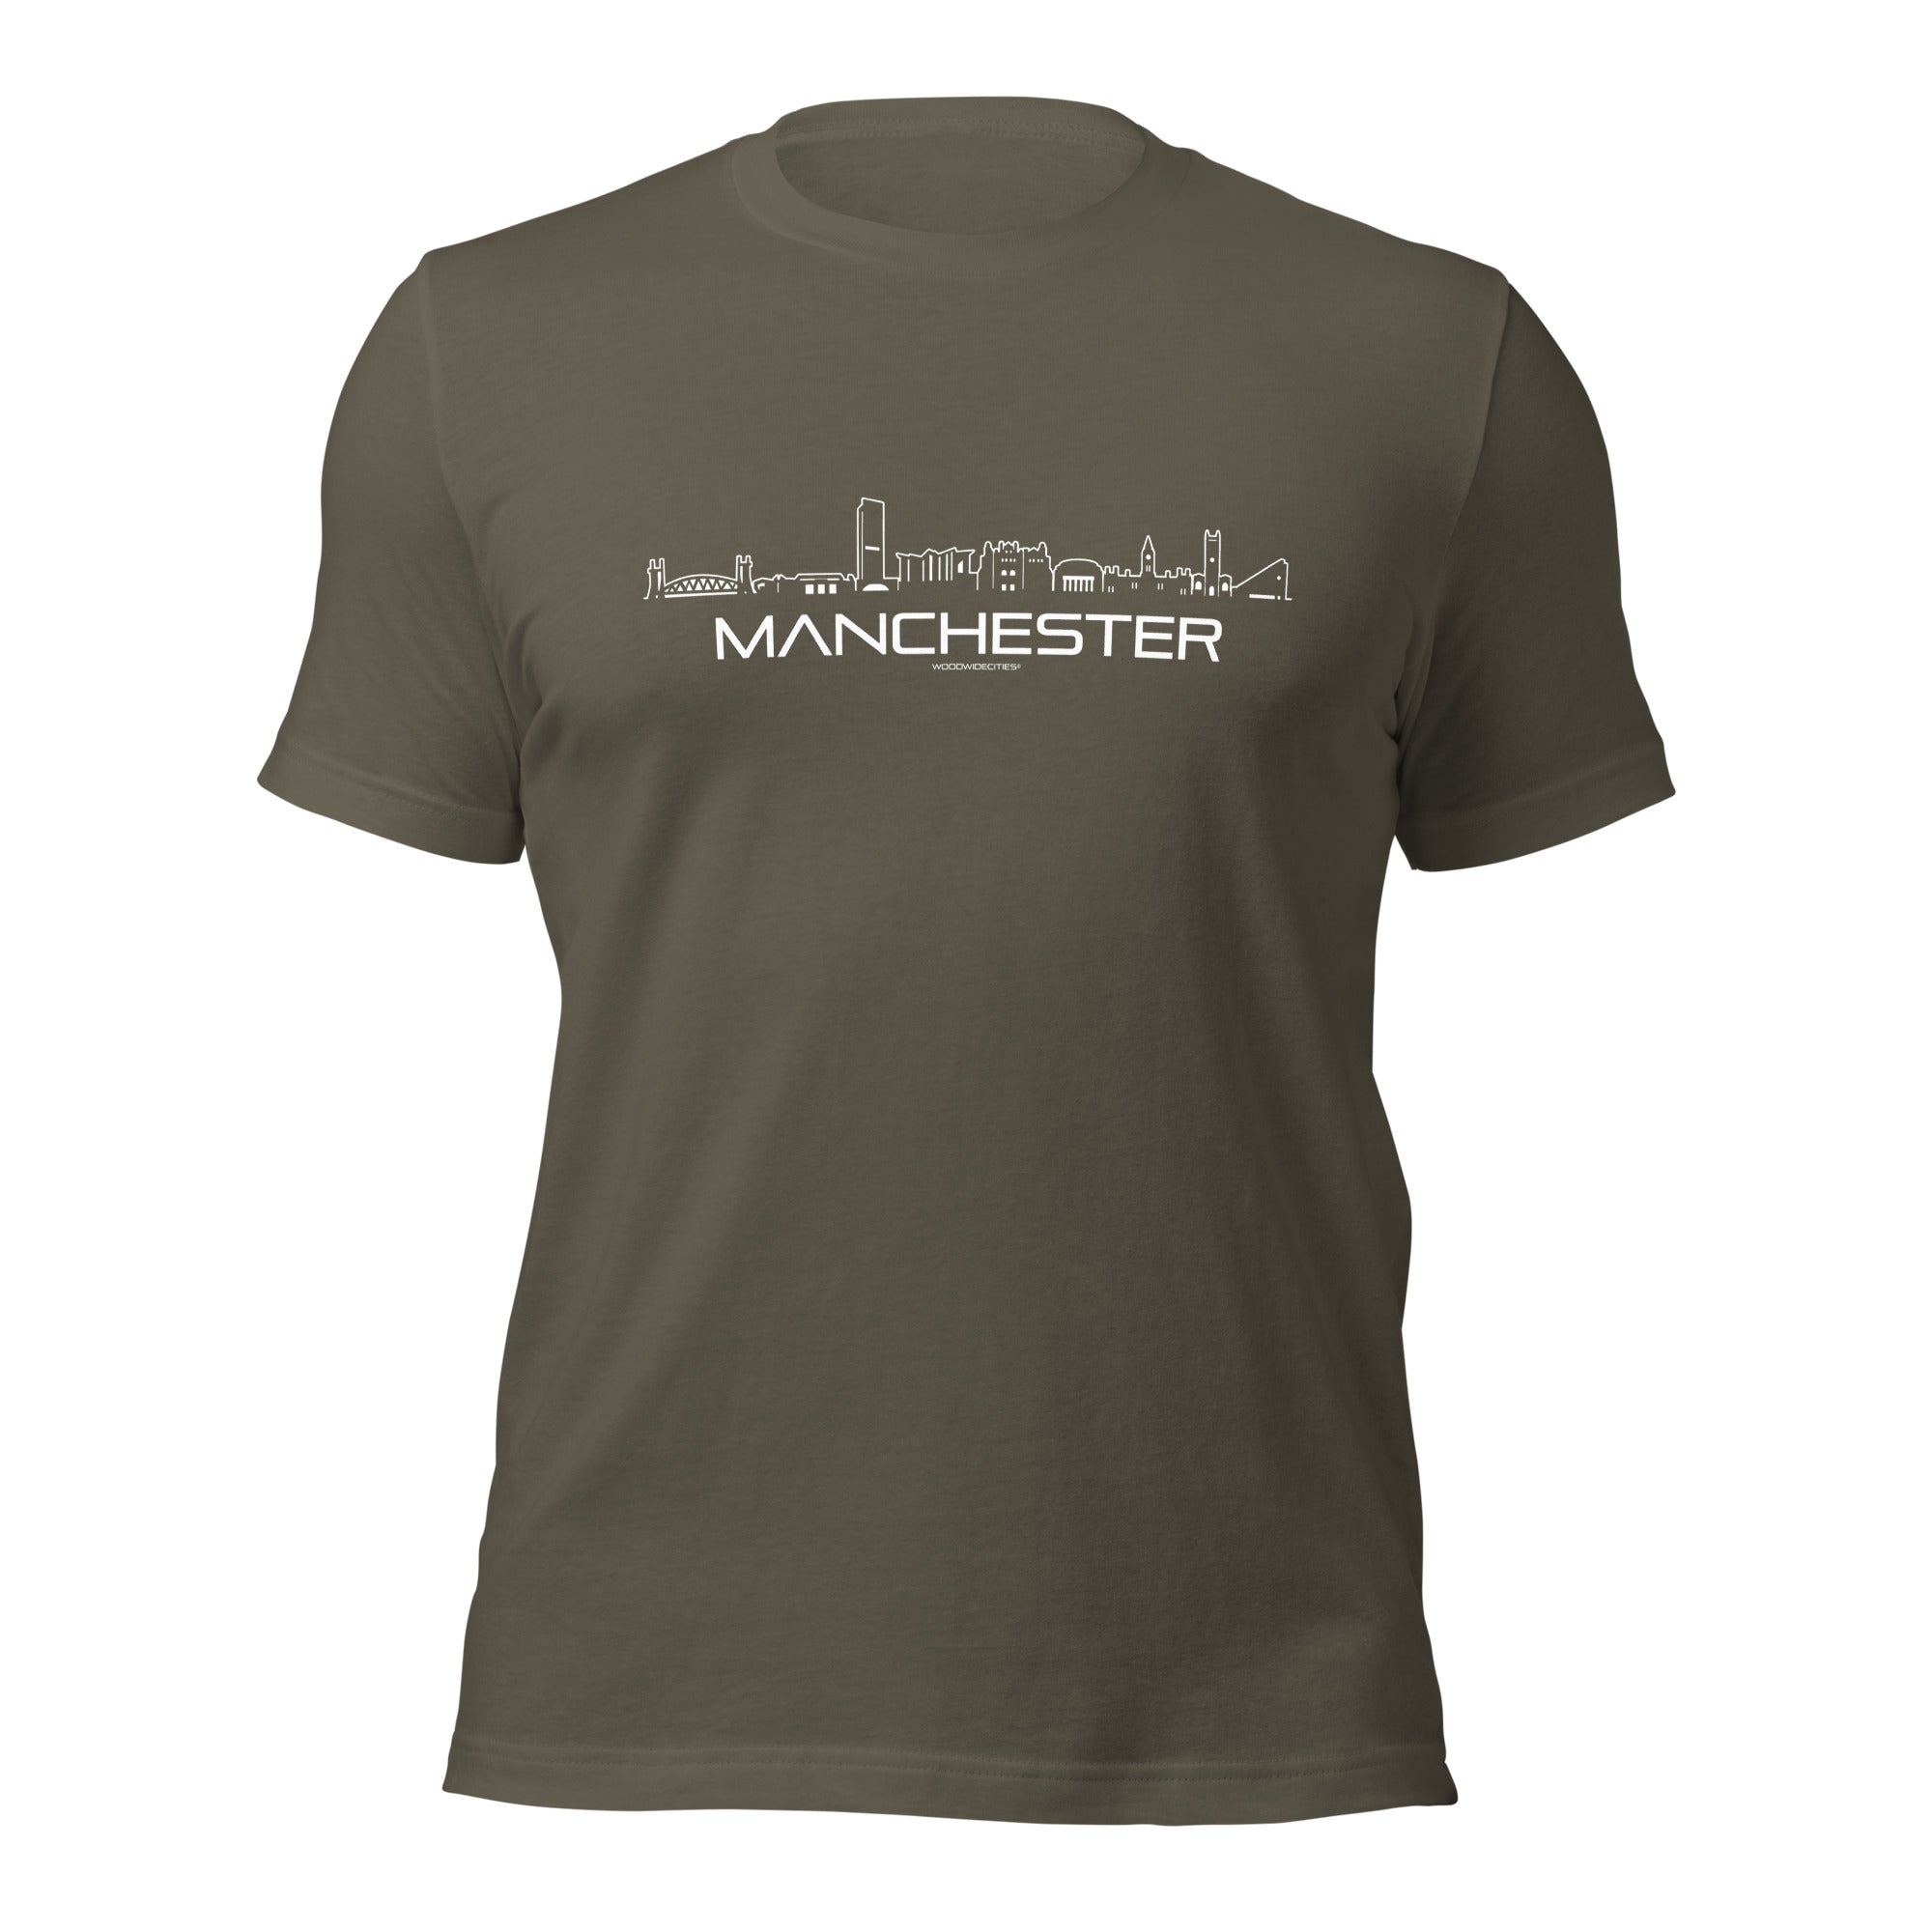 T-Shirt Manchester Army S houten cadeau decoratie relatiegeschenk van WoodWideCities